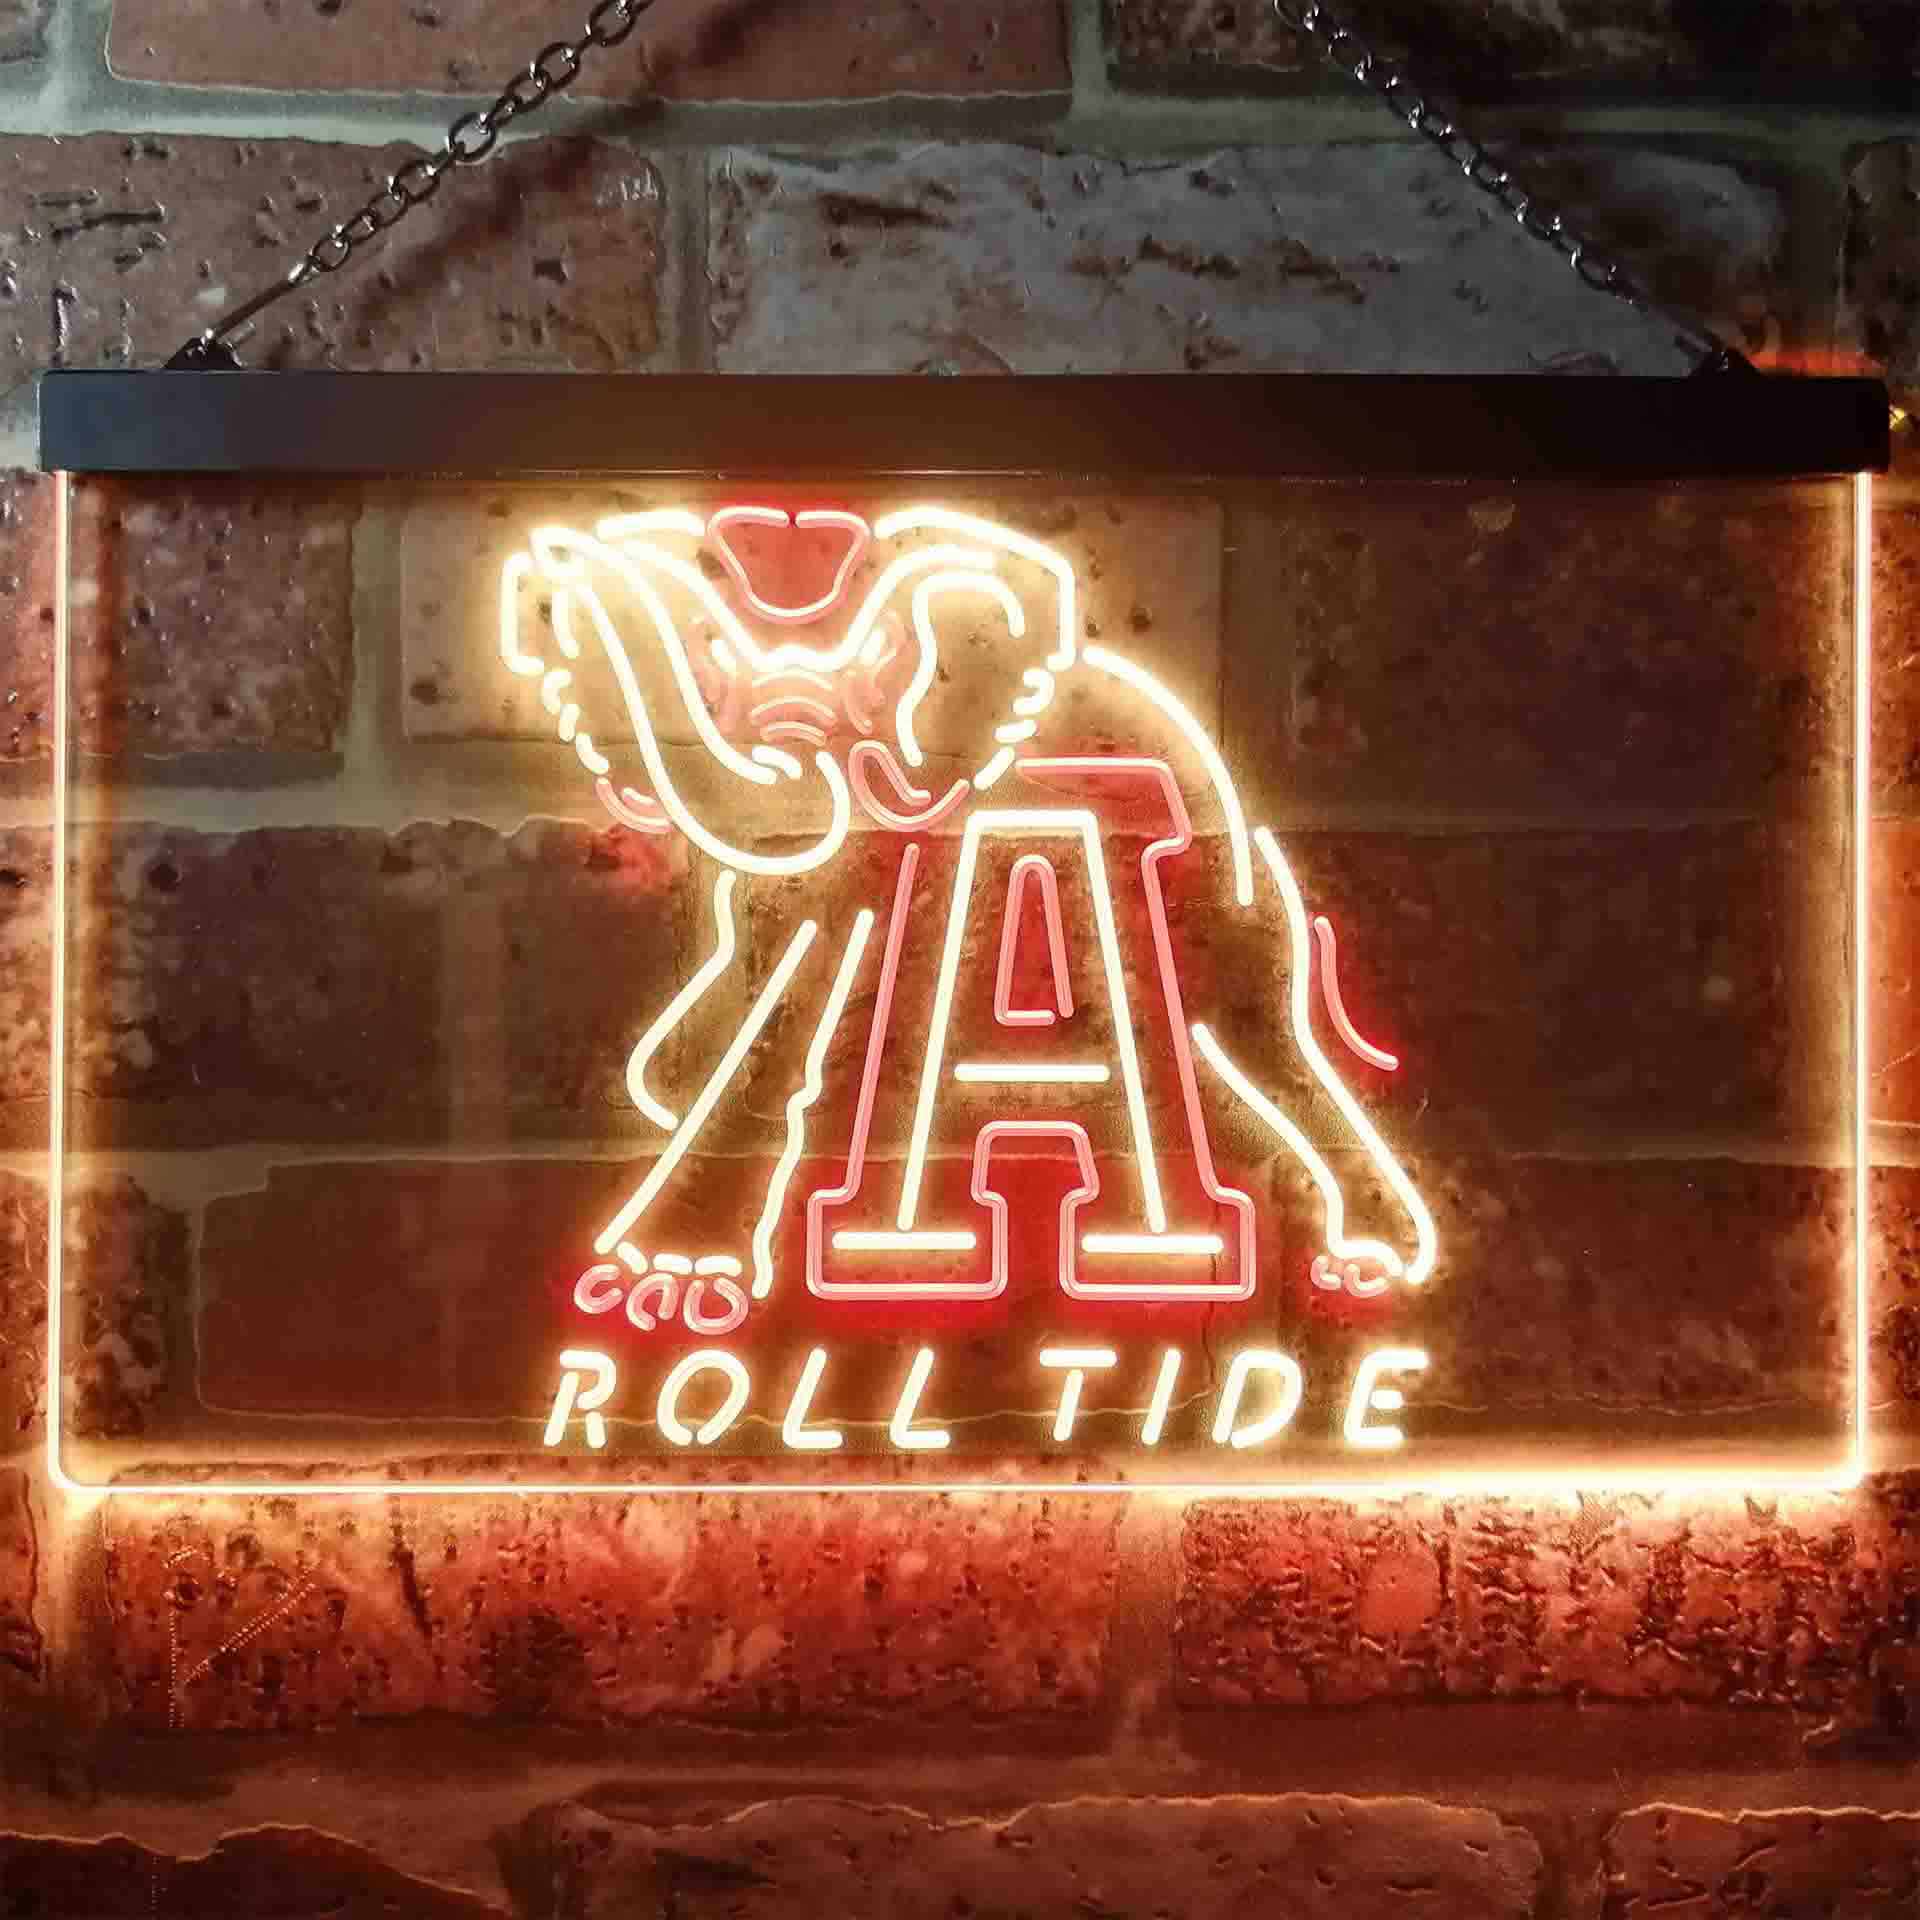 University of Alabama Roll Tide Neon LED Sign